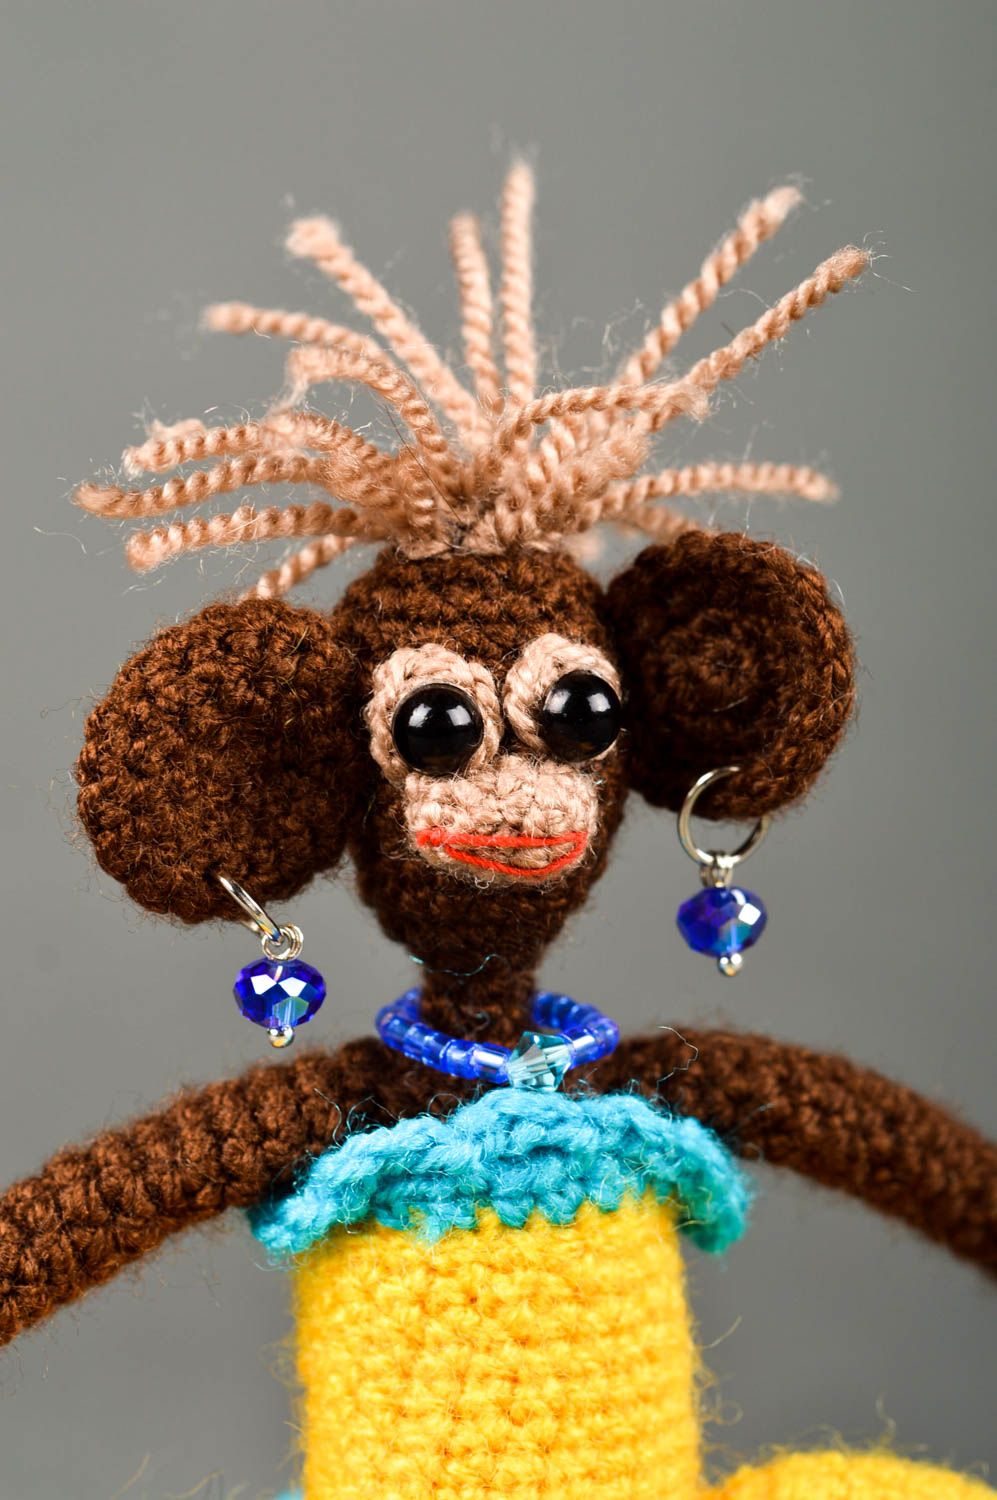 Hand-crocheted creative toy handmade trendy toy for babies nursery decor photo 4